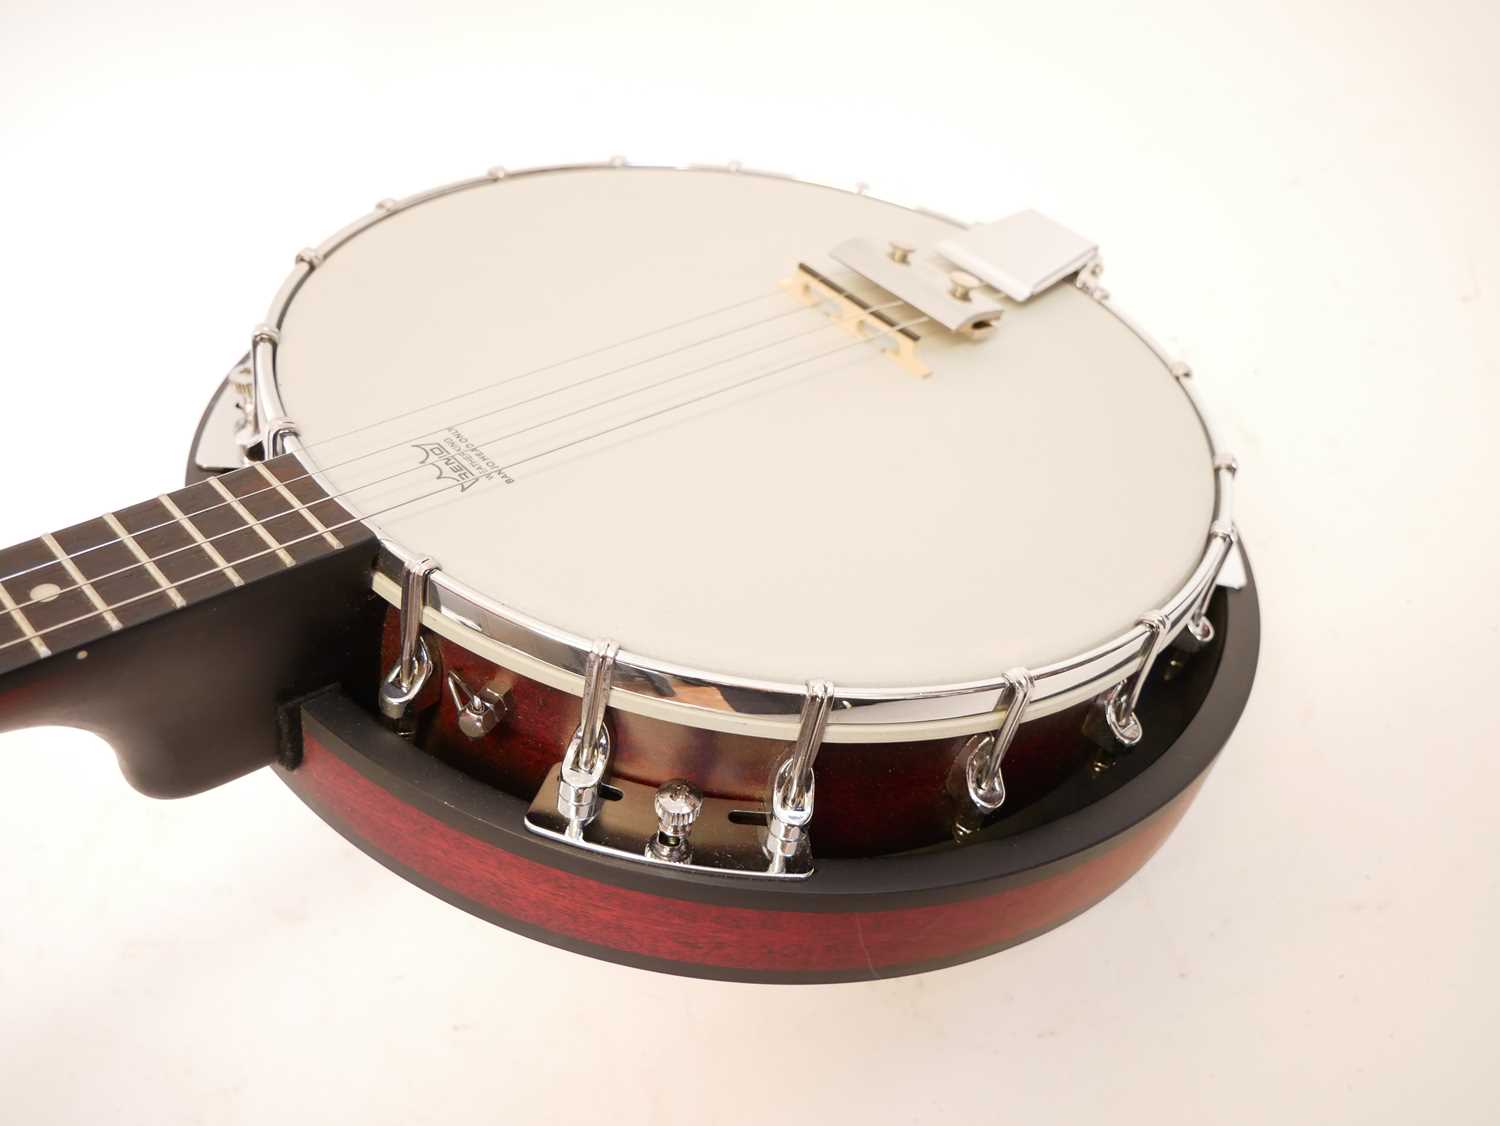 Tanglewood tenor banjo - Image 2 of 8